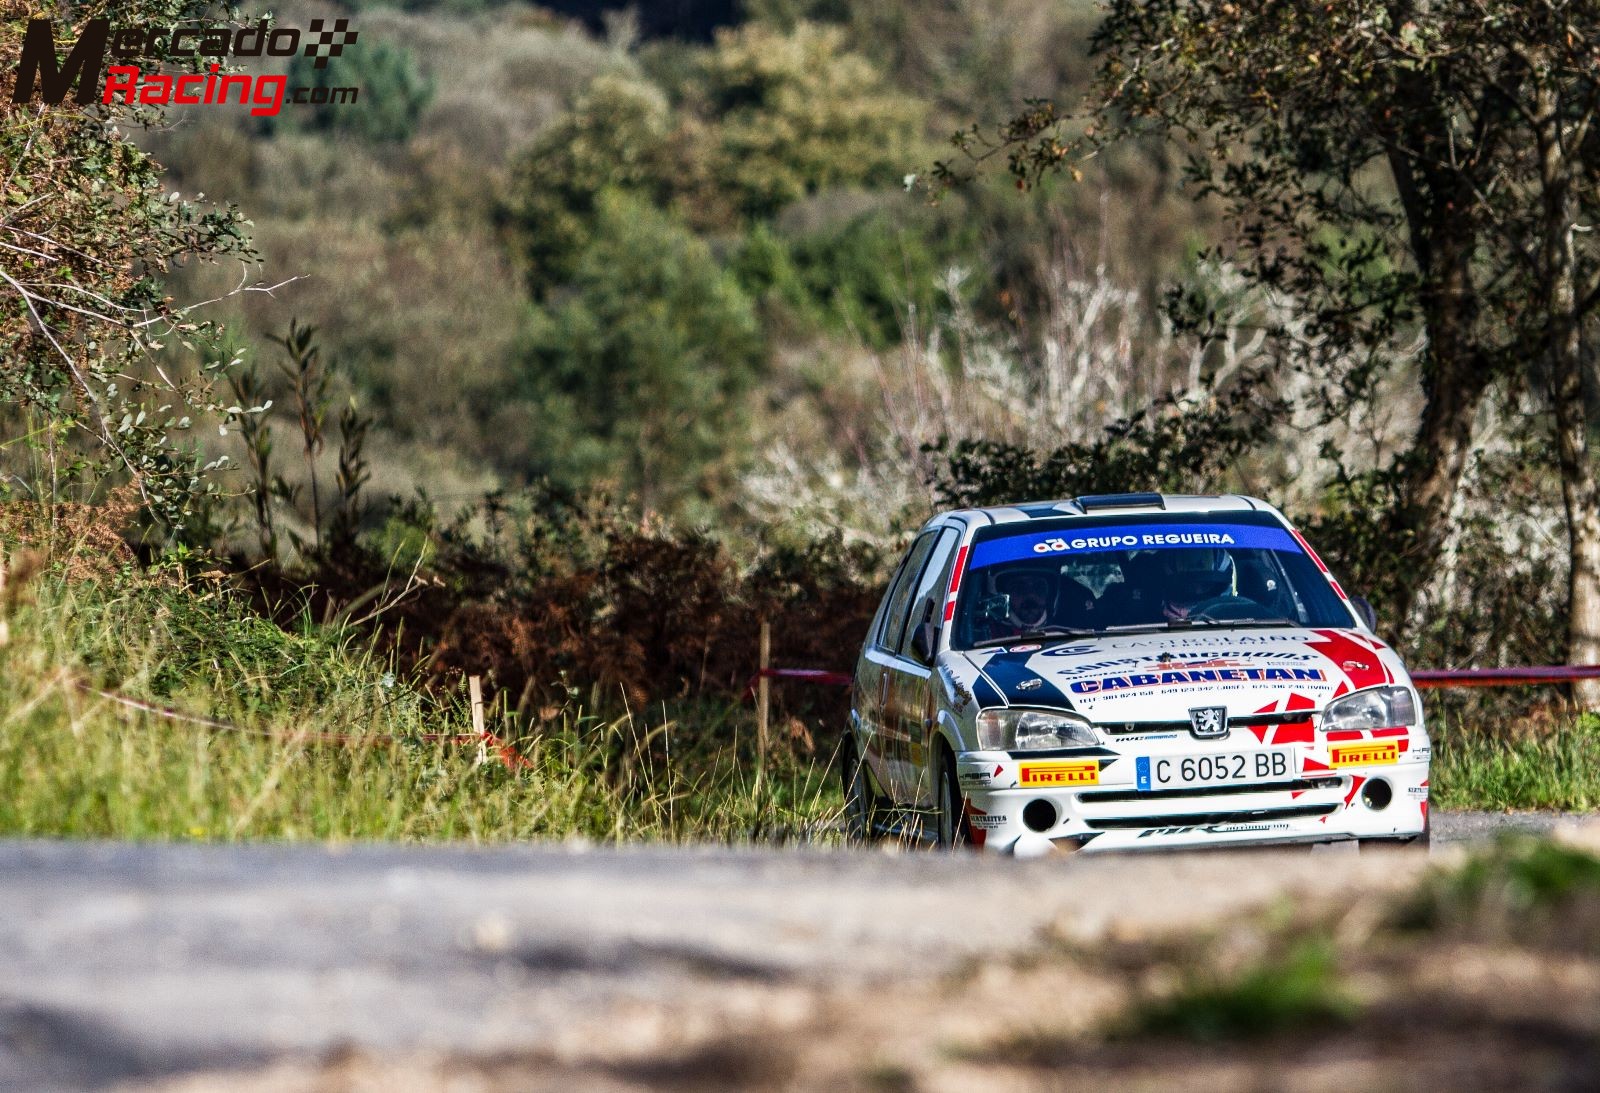 Peugeot 106 rallys